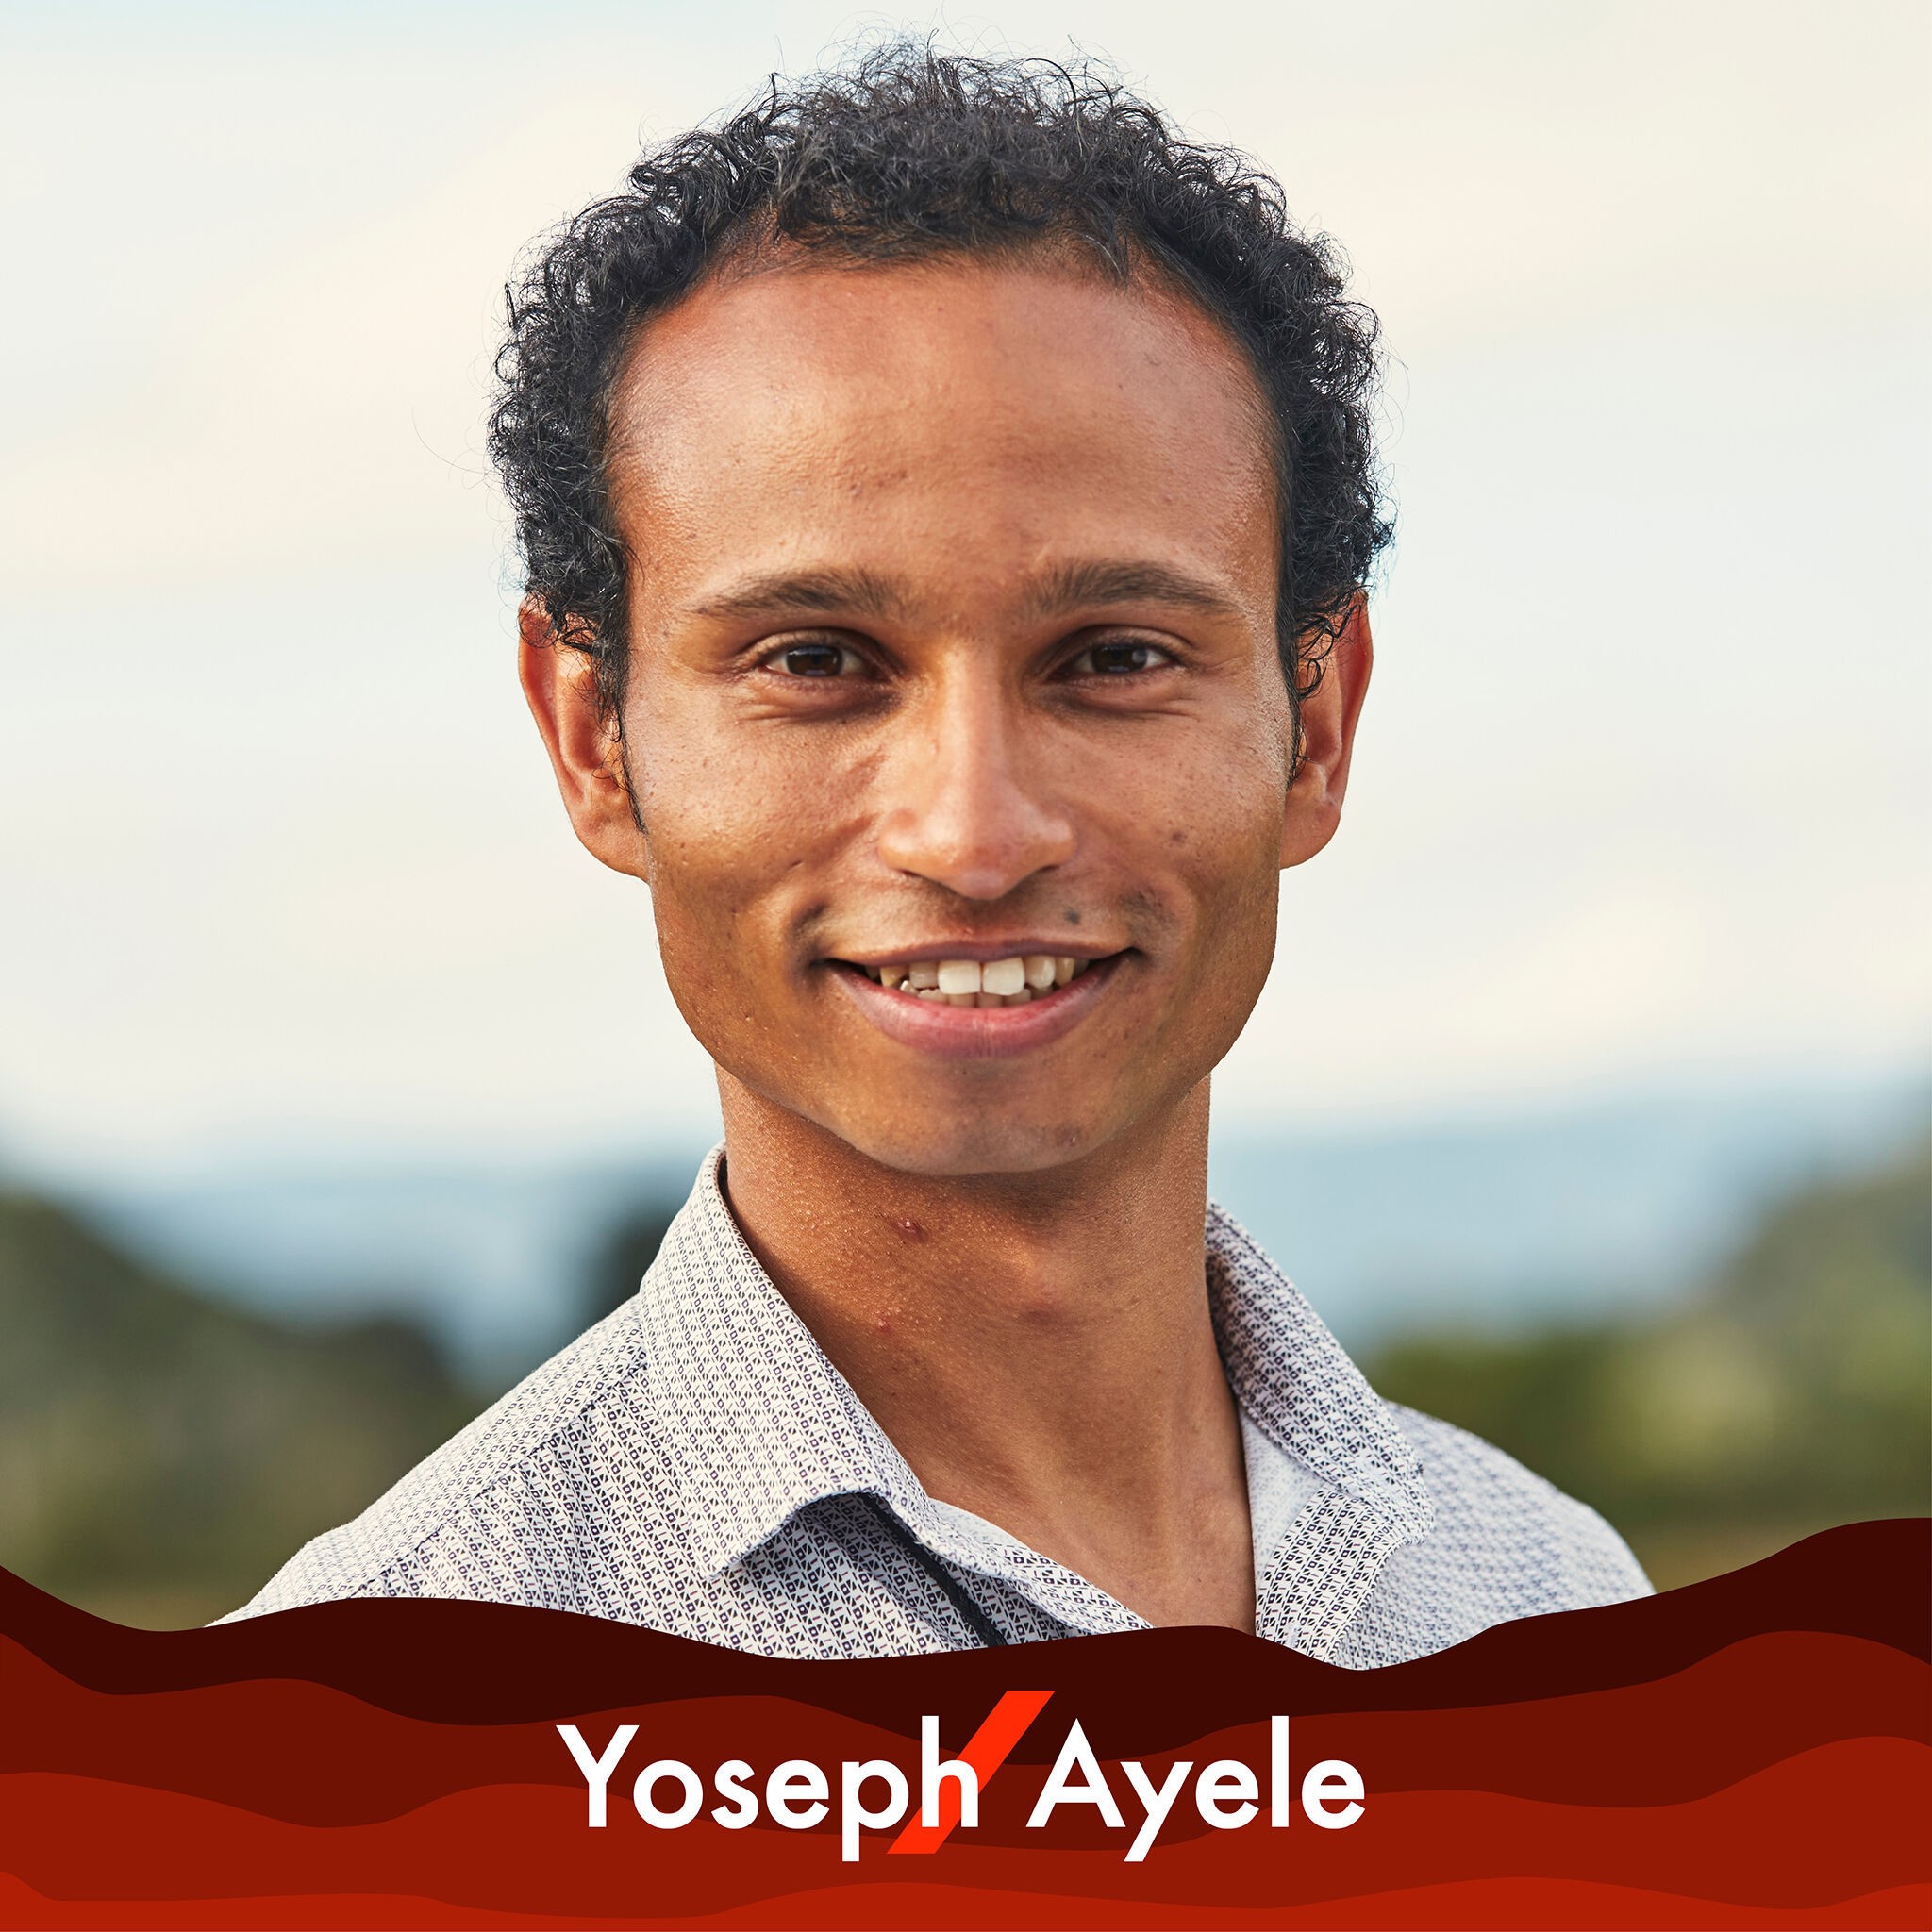 A picture of Yoseph Ayele